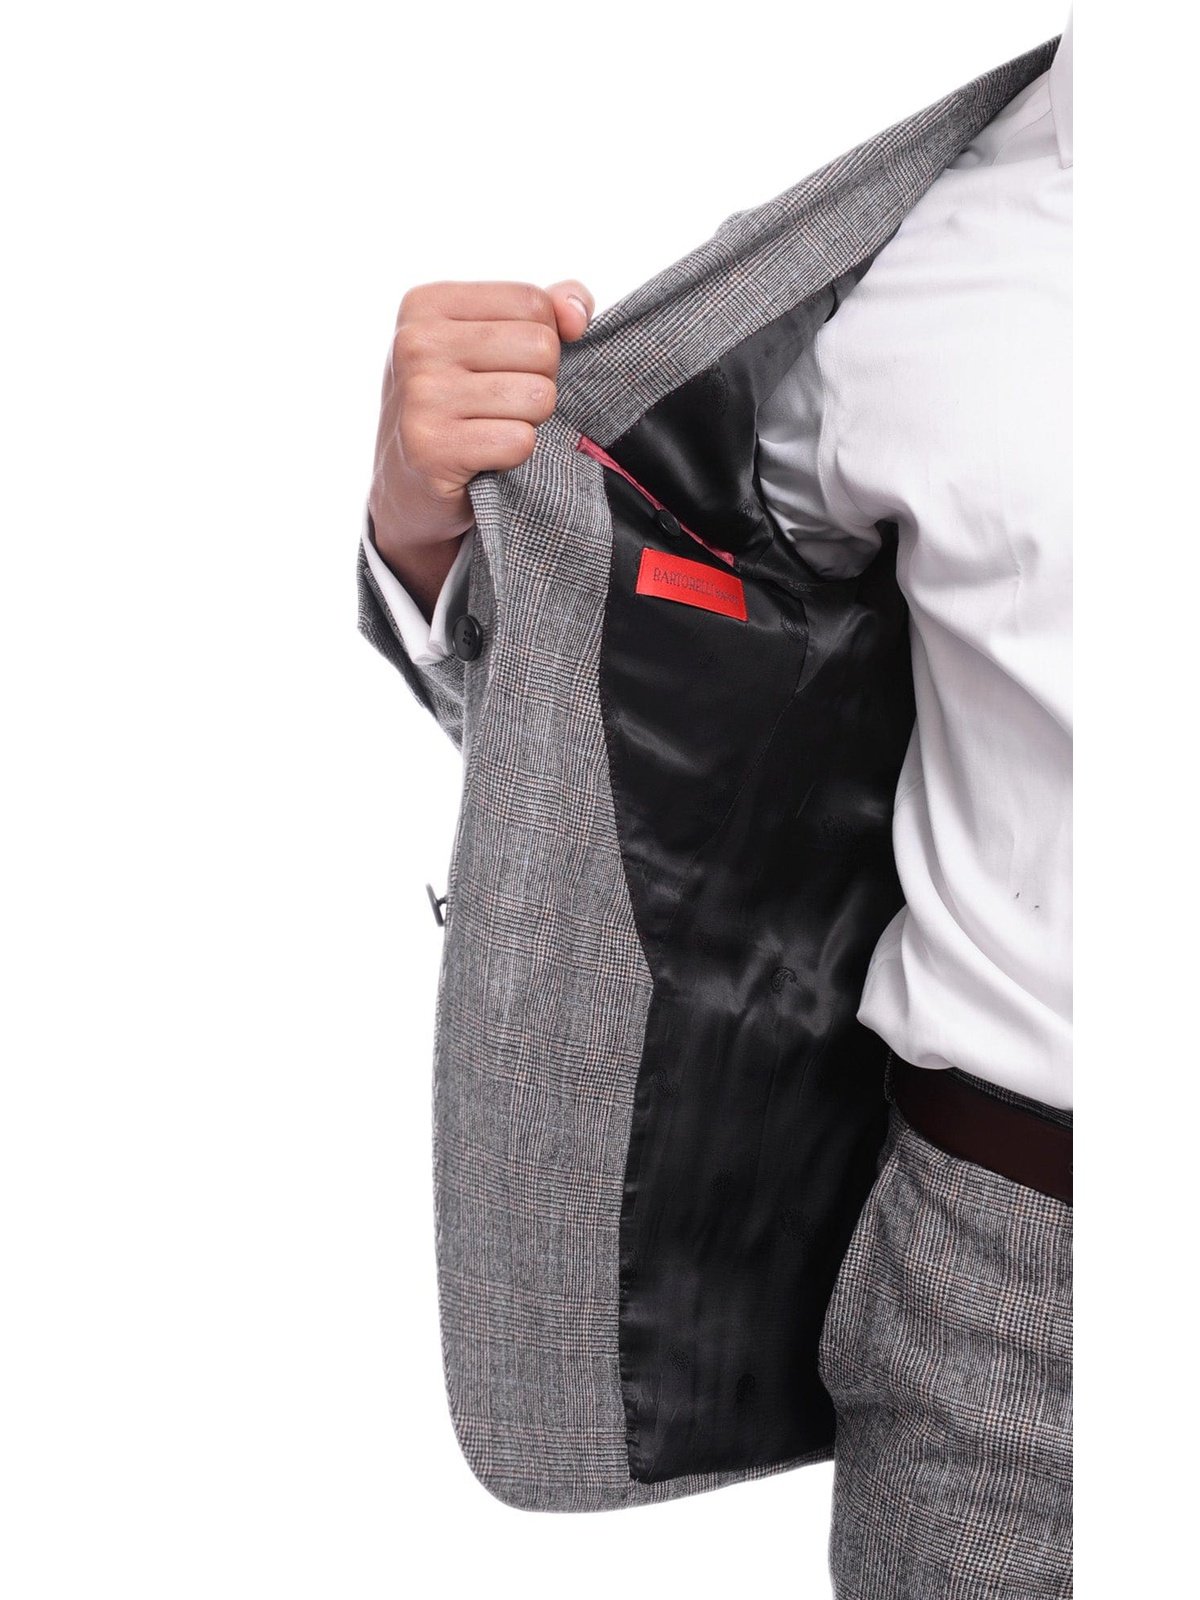 Napoli TWO PIECE SUITS Napoli Slim Fit Gray &amp; Subtle Brown Glen Plaid Half Canvassed Cashmere Wool Suit